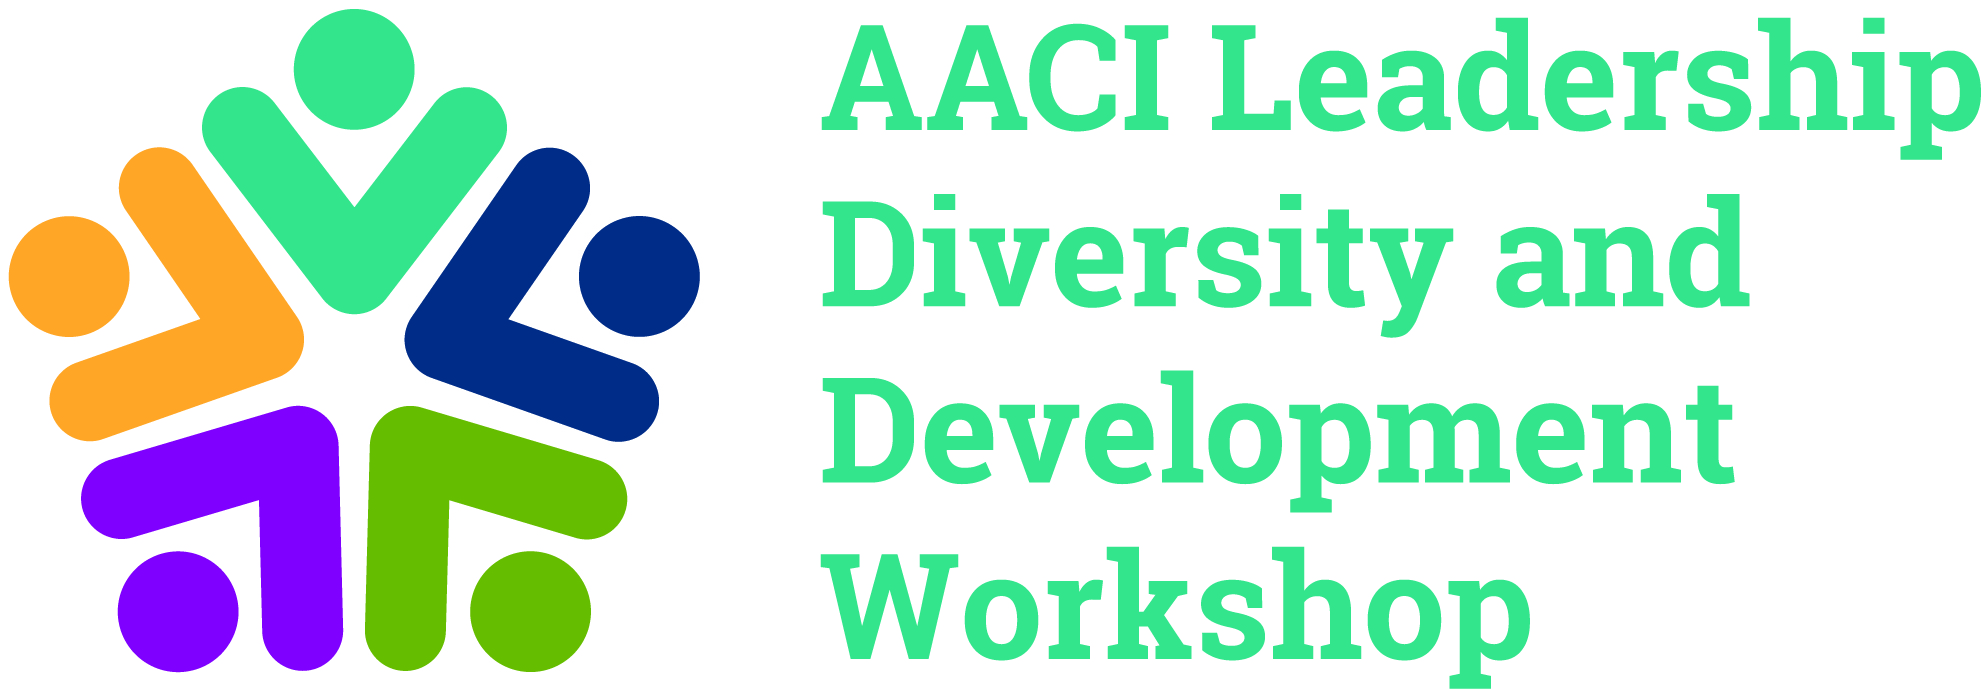 Leadership Diversity and Development Workshop